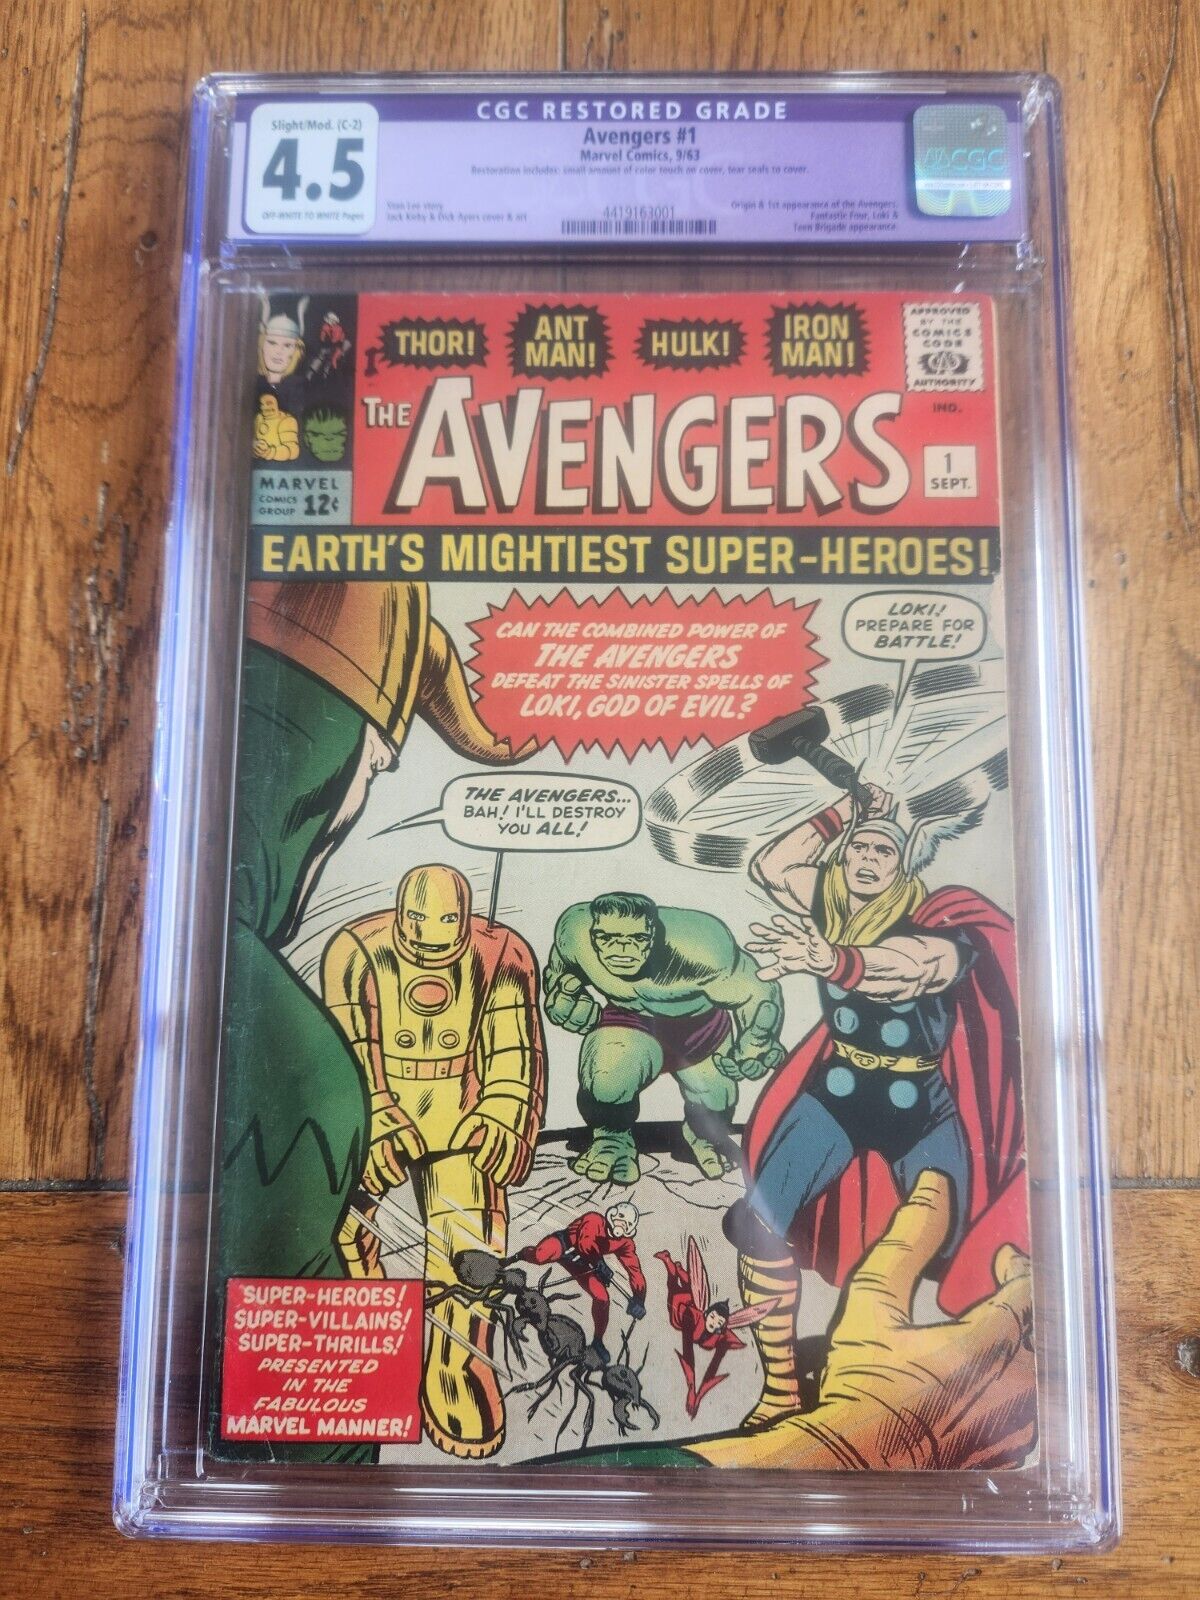 Avengers #1 CGC GD- 4.5 (Restored) Thor Captain America Iron Man Hulk